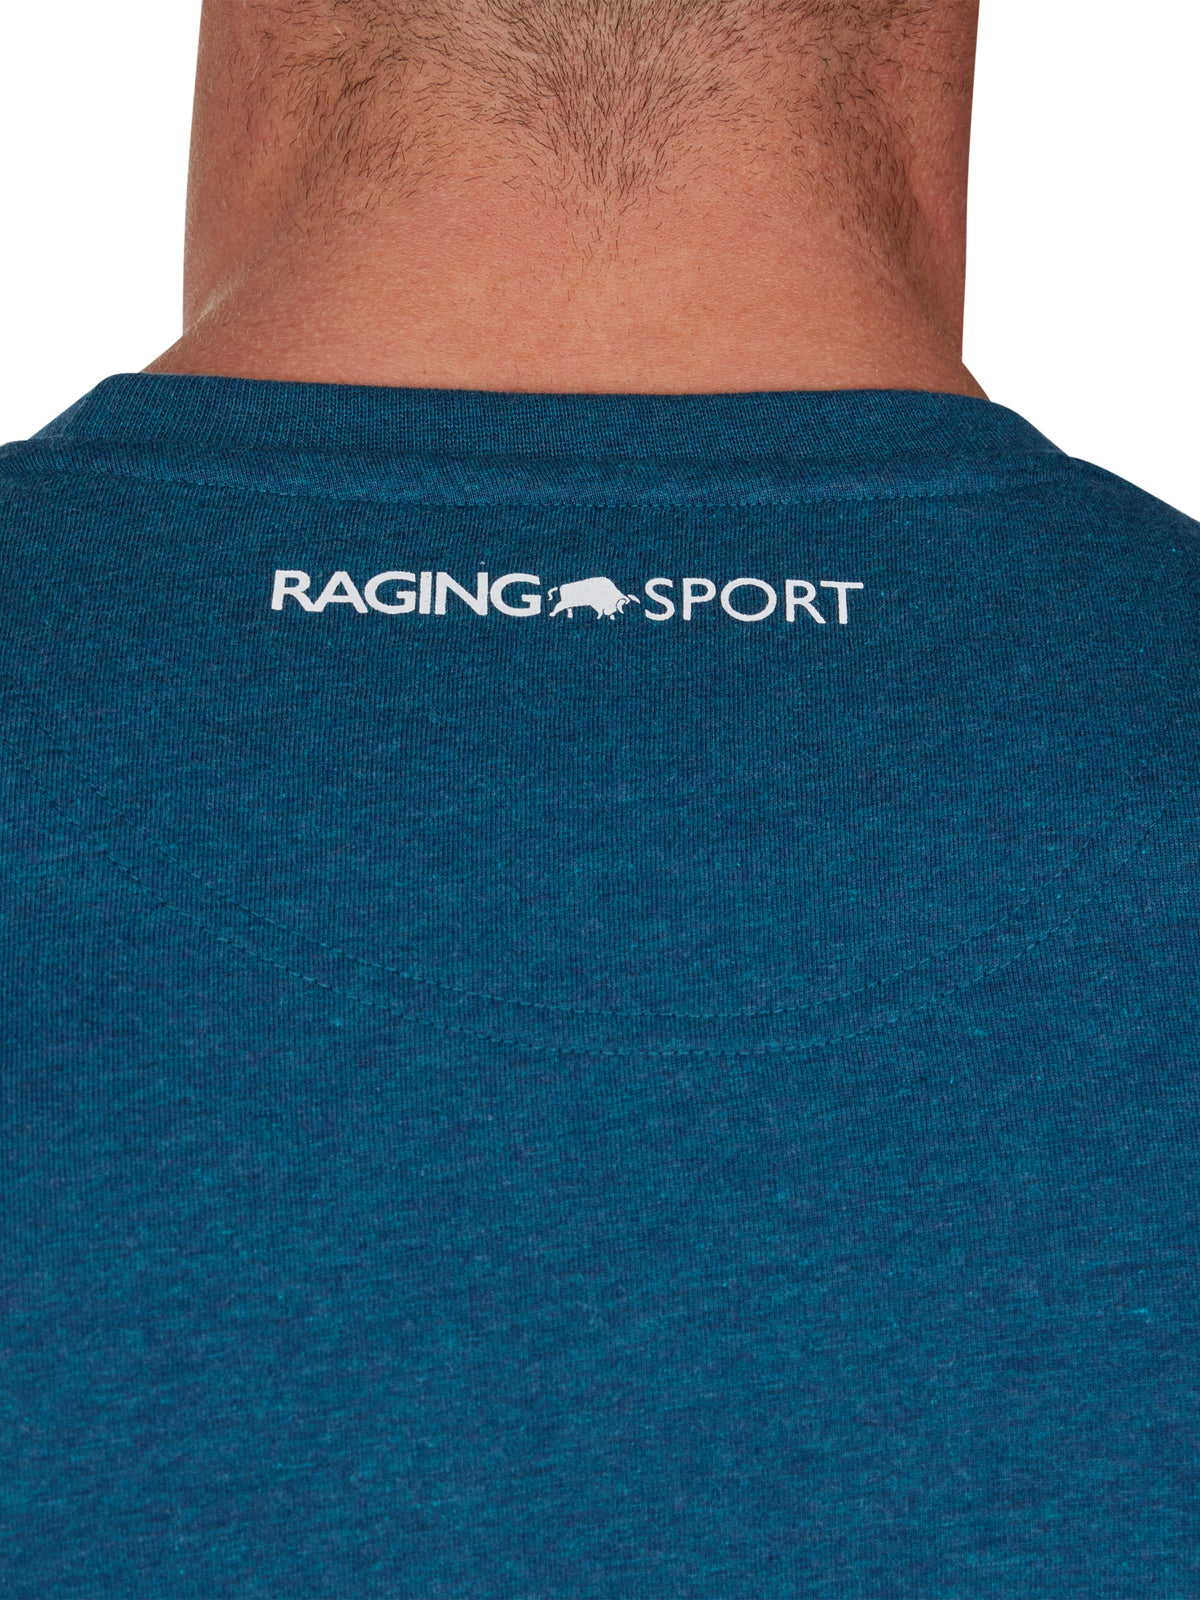 RB Sport No Pain T-Shirt - Peacock Blue